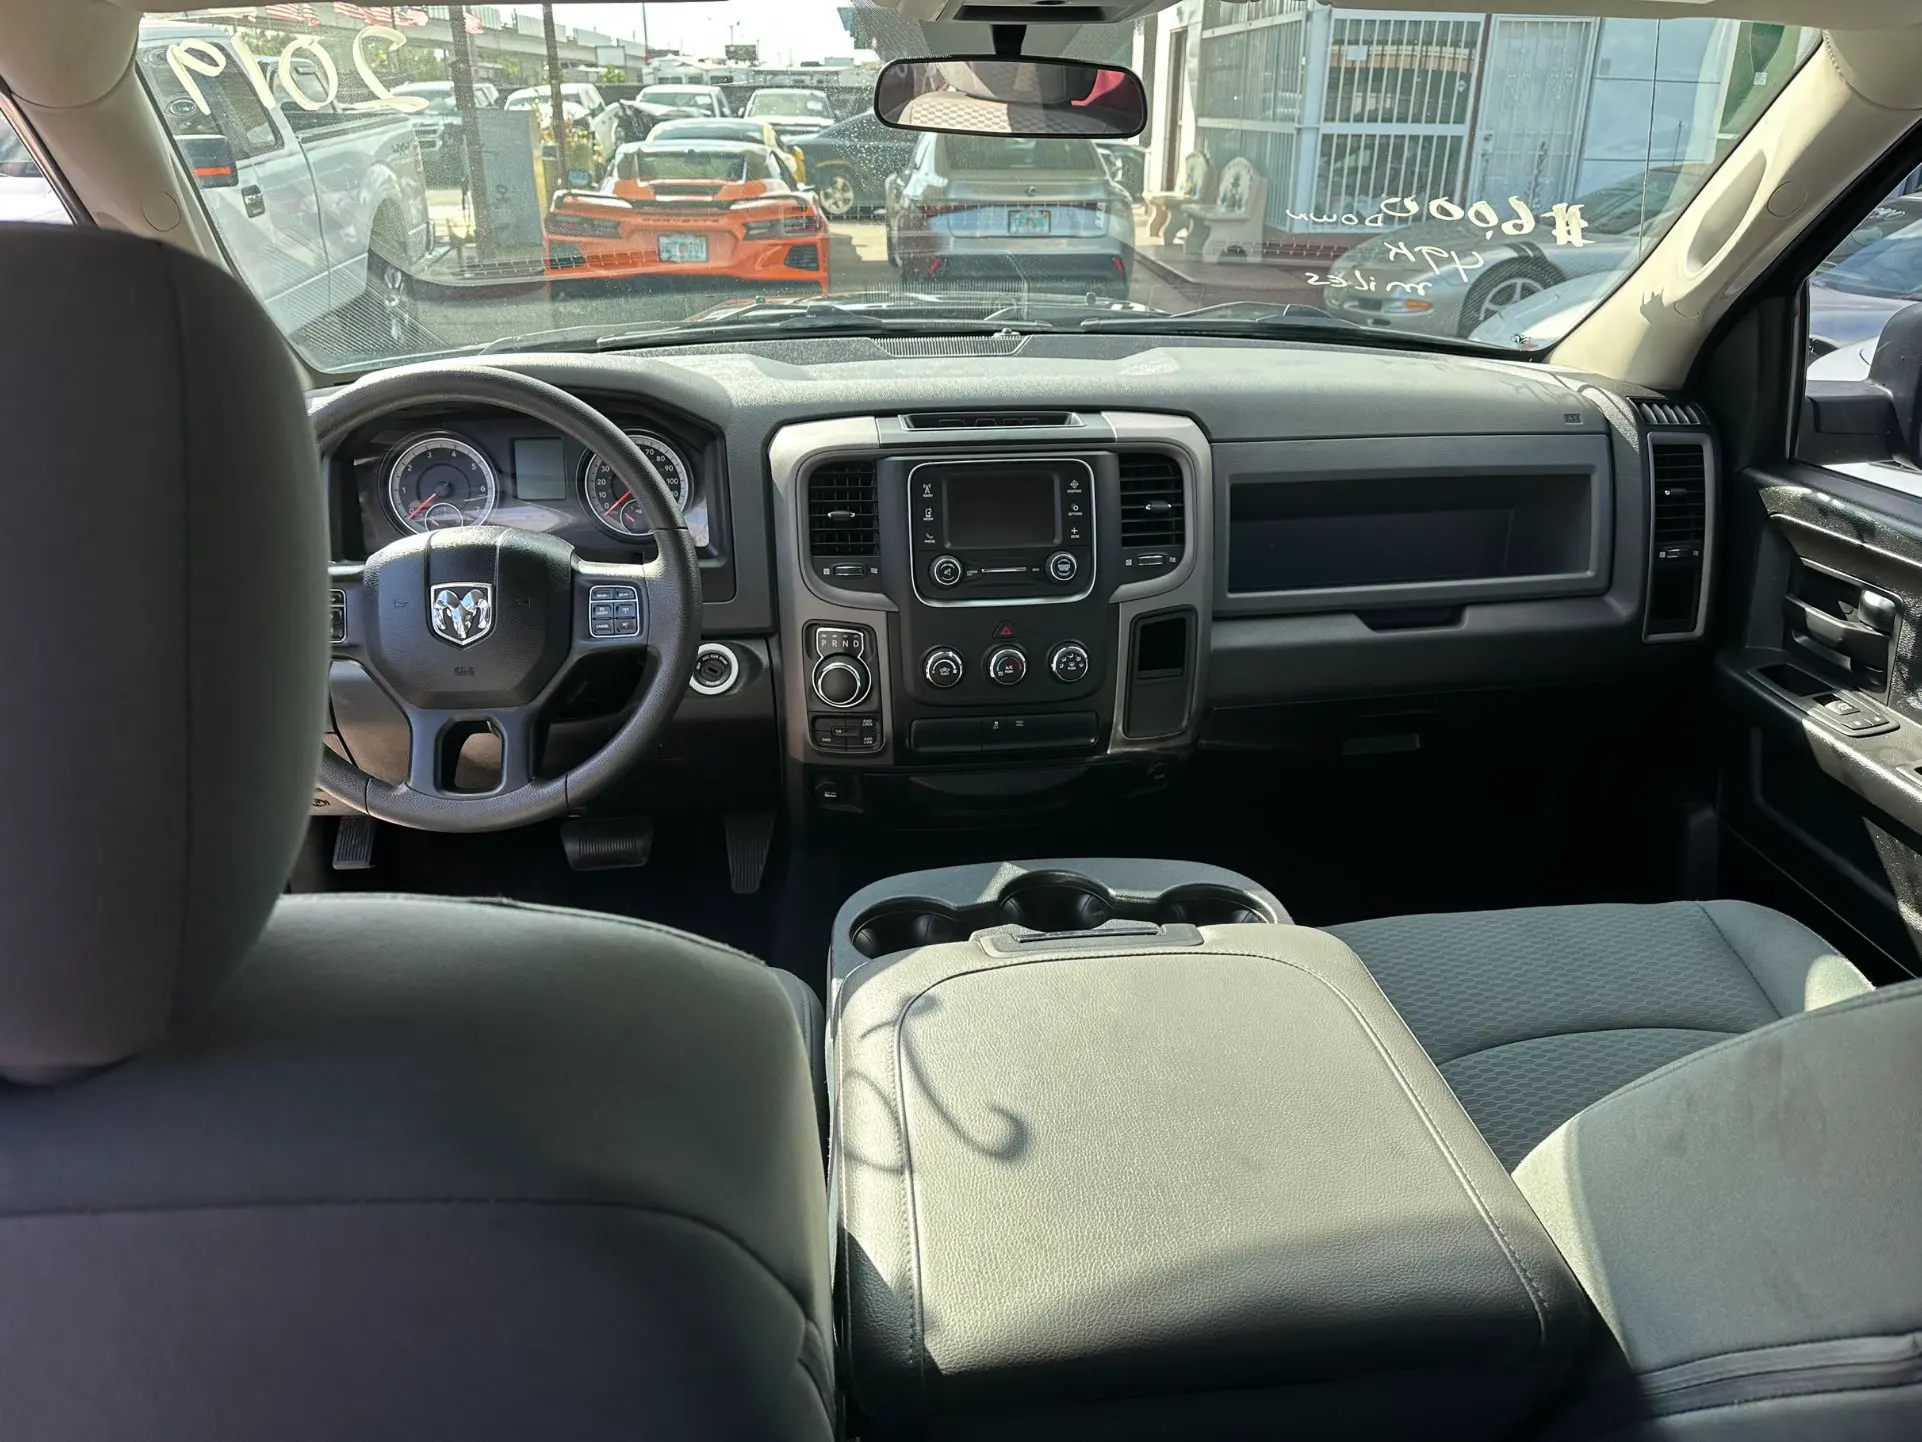 used 2019 Dodge Ram - interior view 1